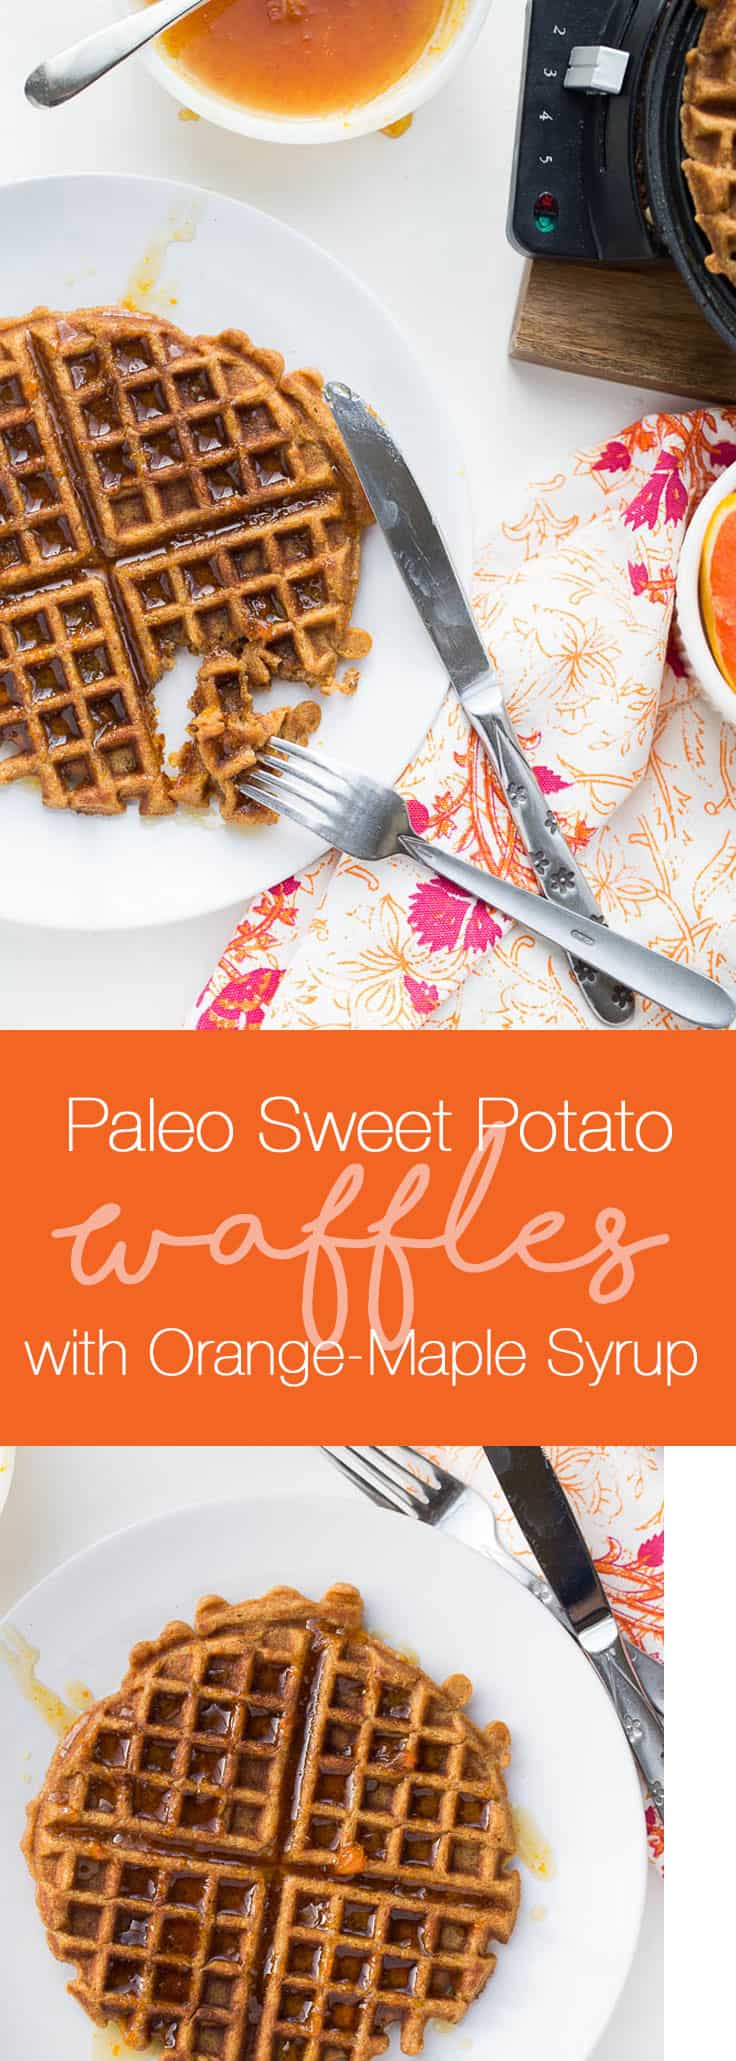 Paleo Sweet Potato Waffles with Orange-Maple Syrup | paleo recipes | waffle recipes | gluten-free recipes | sweet potatoes | perrysplate.com